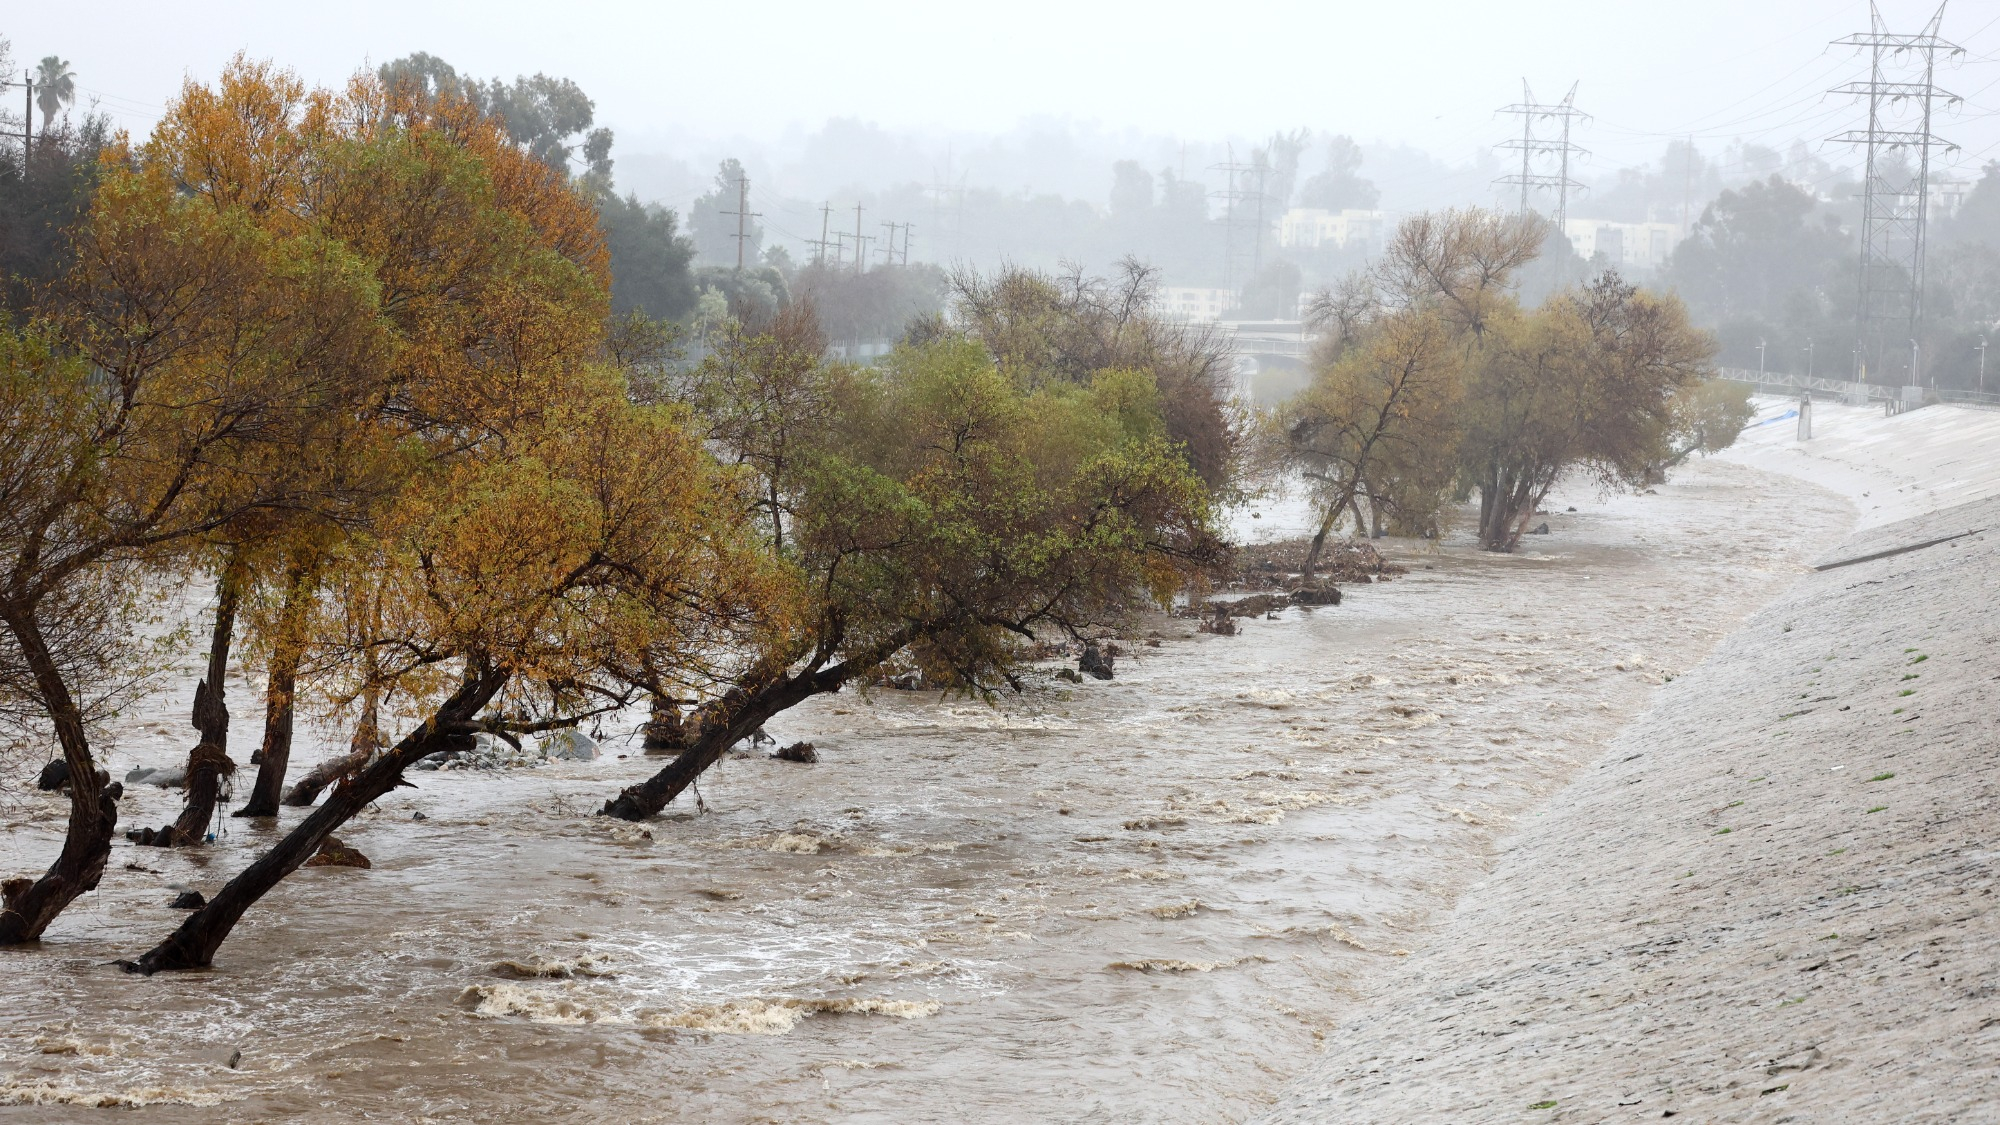 Rain, storms, and mudslides batter California